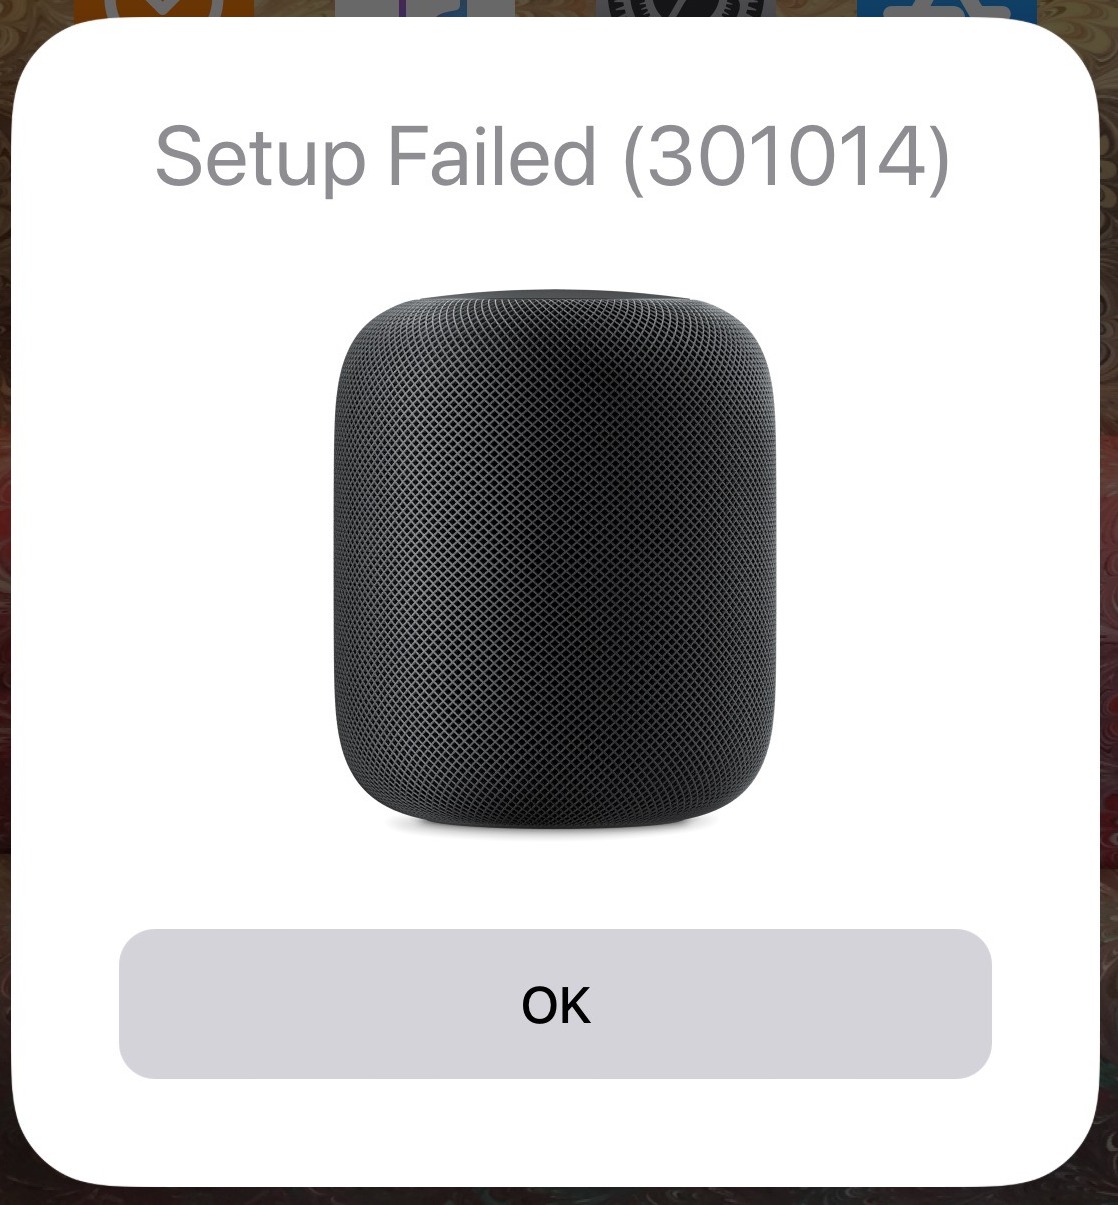 Homepod setup fails with error 301014 